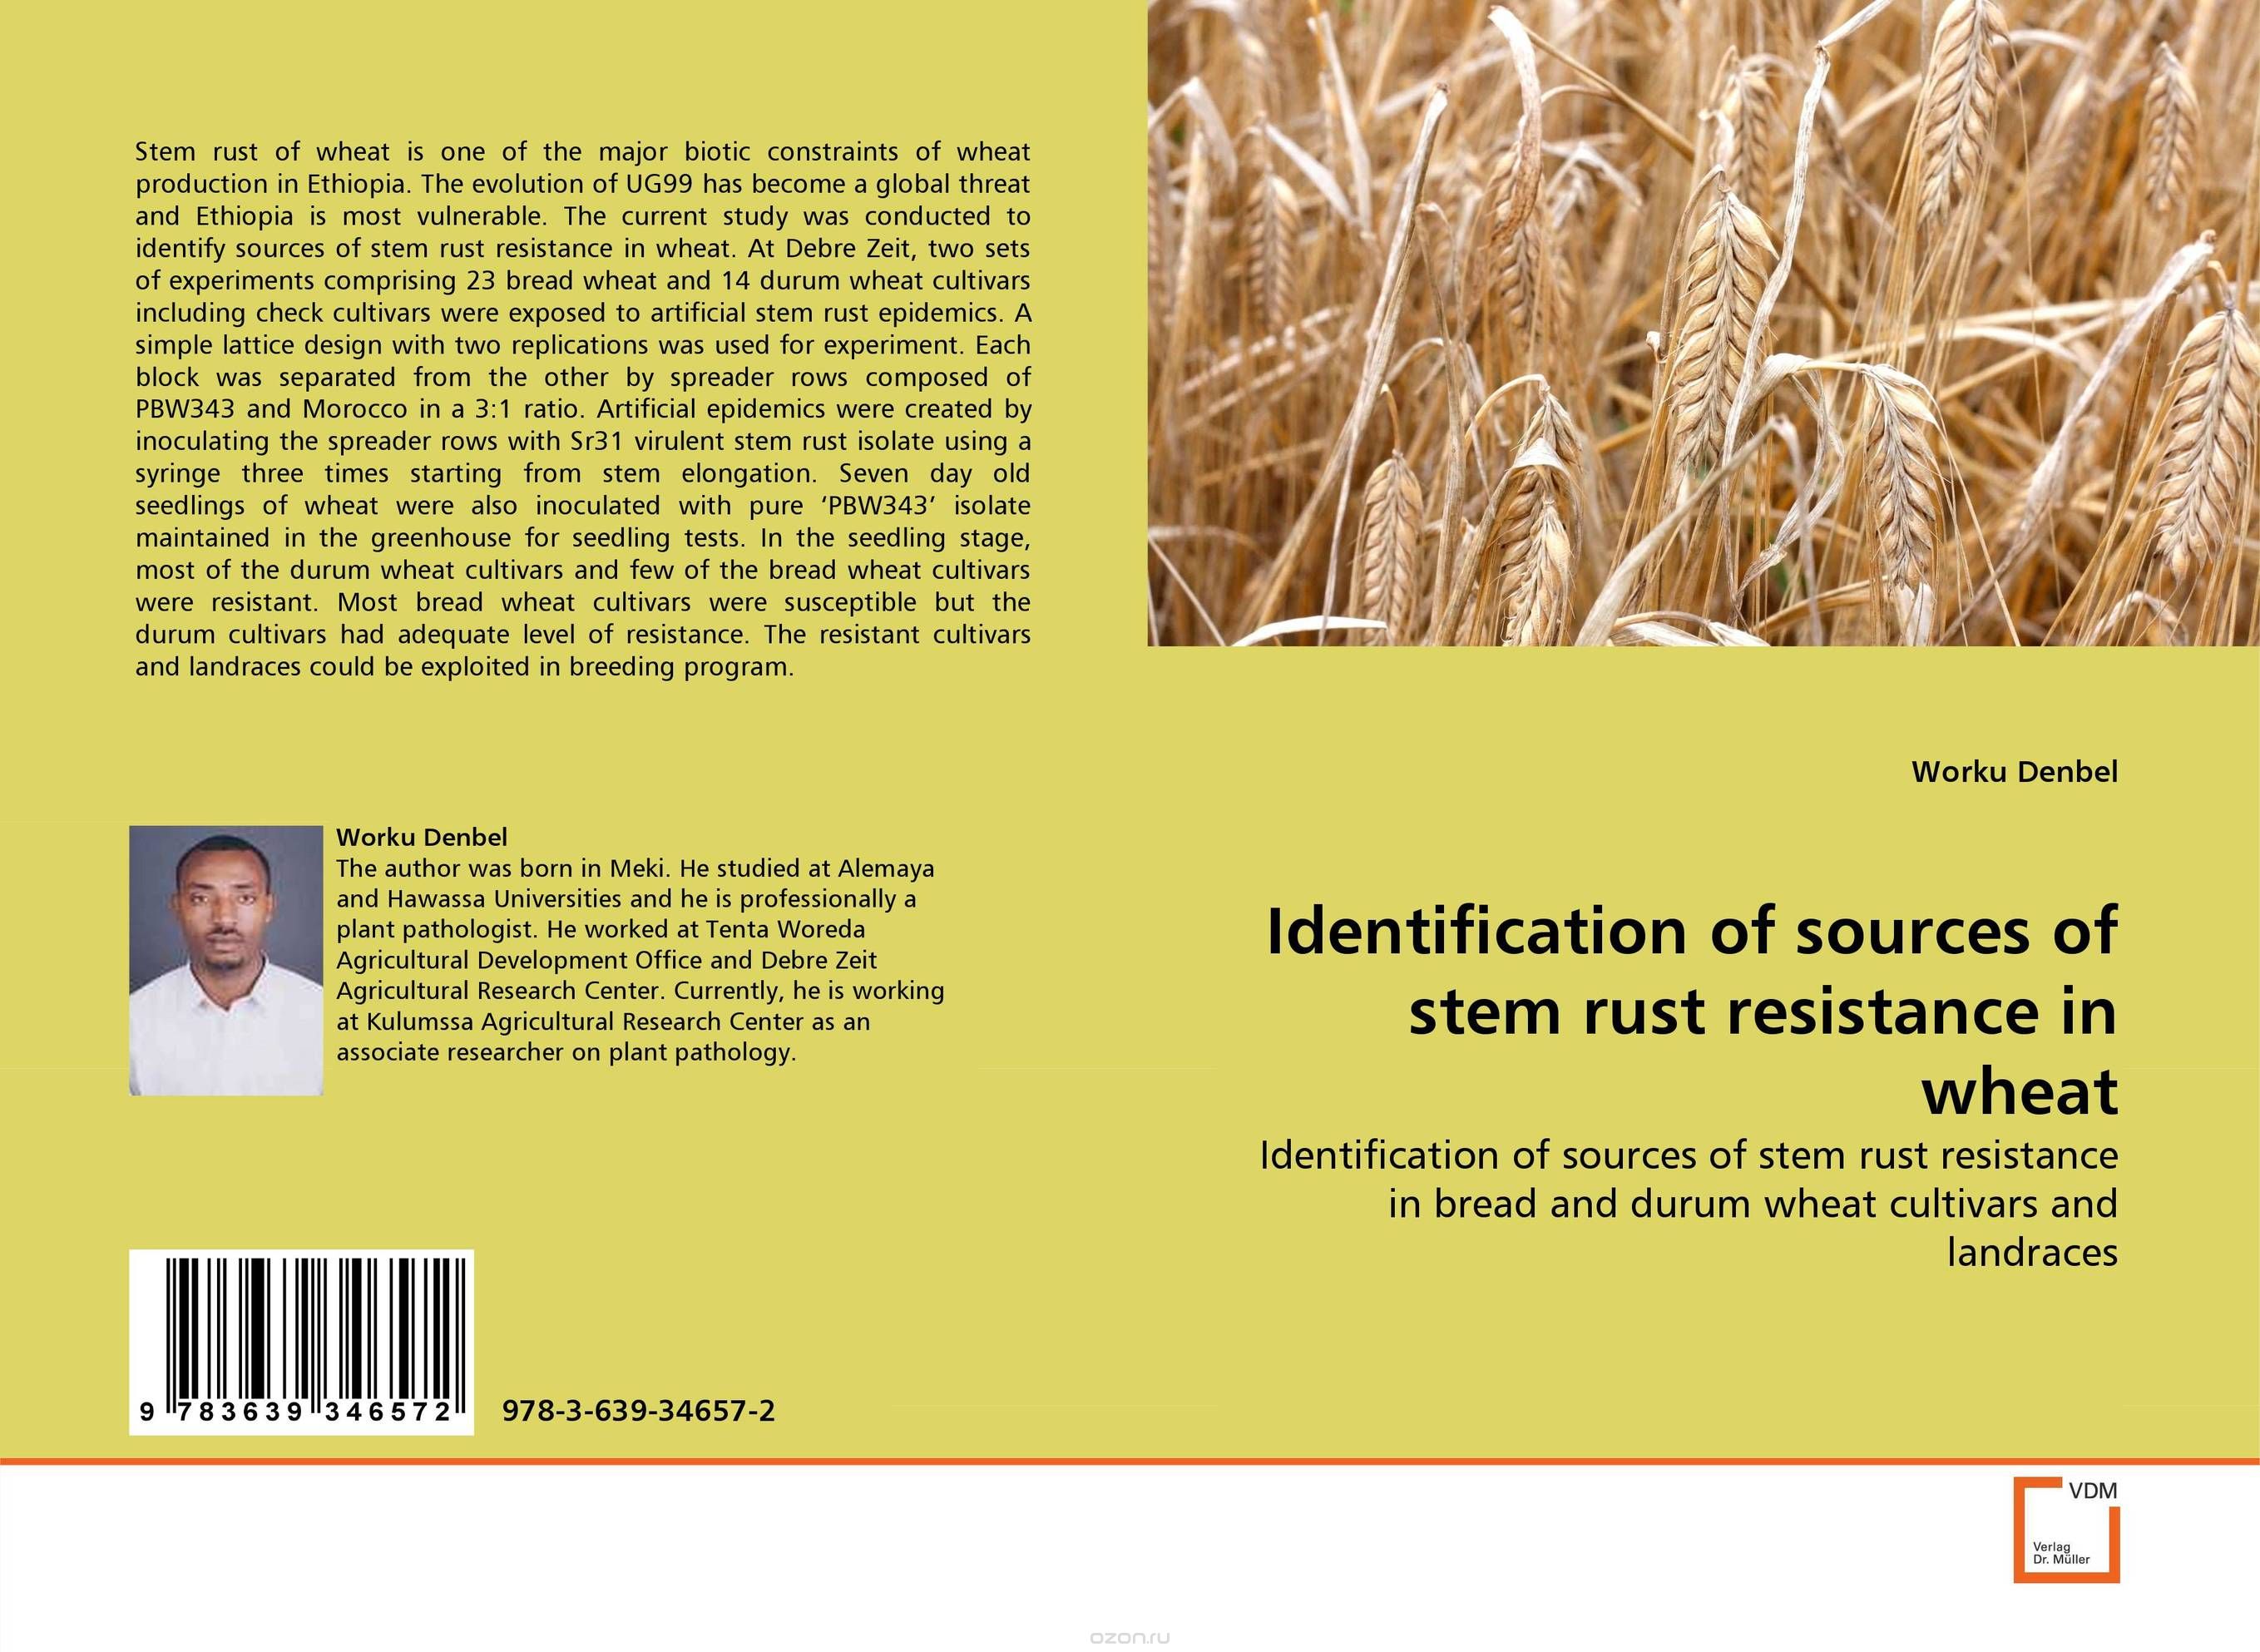 Скачать книгу "Identification of sources of stem rust resistance in wheat"